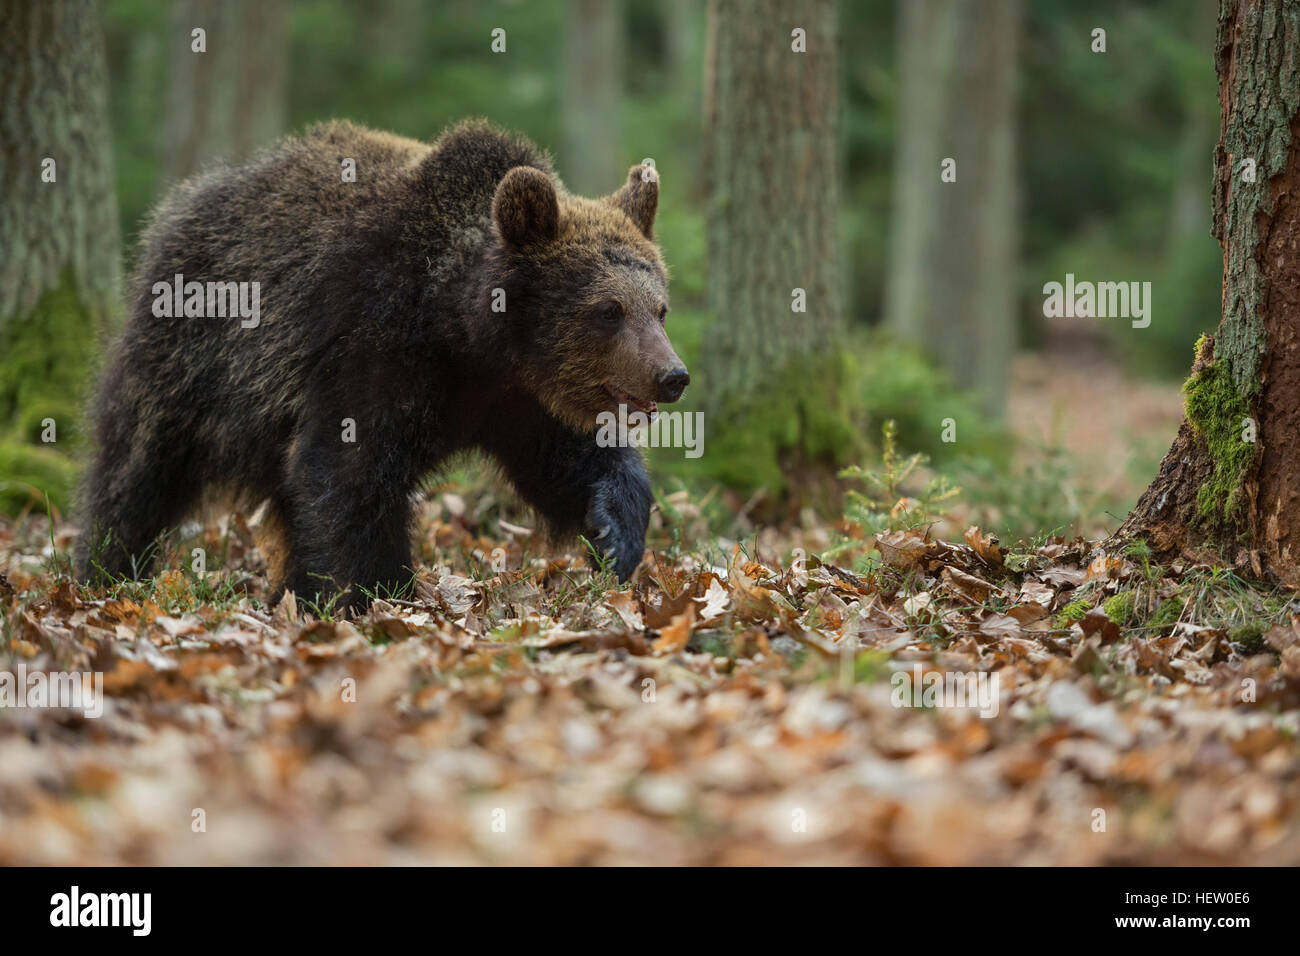 European Brown Bear / Braunbaer ( Ursus arctos ), young, walking / strolling through a forest, exploring its surrounding. Stock Photo